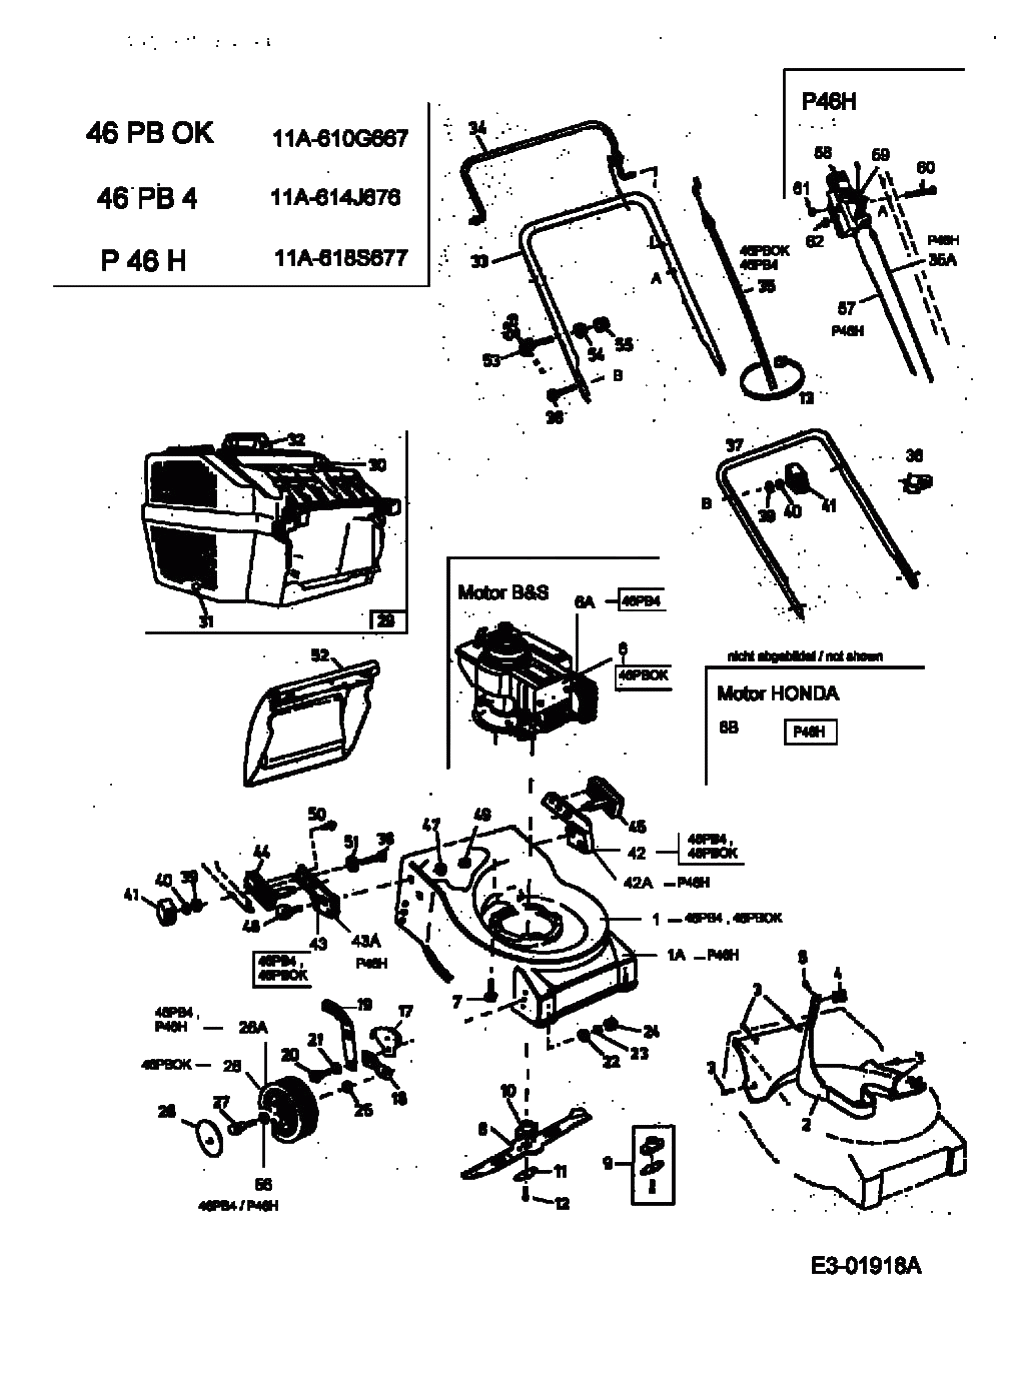 MTD Артикул 11A-614J676 (год выпуска 2004). Основная деталировка